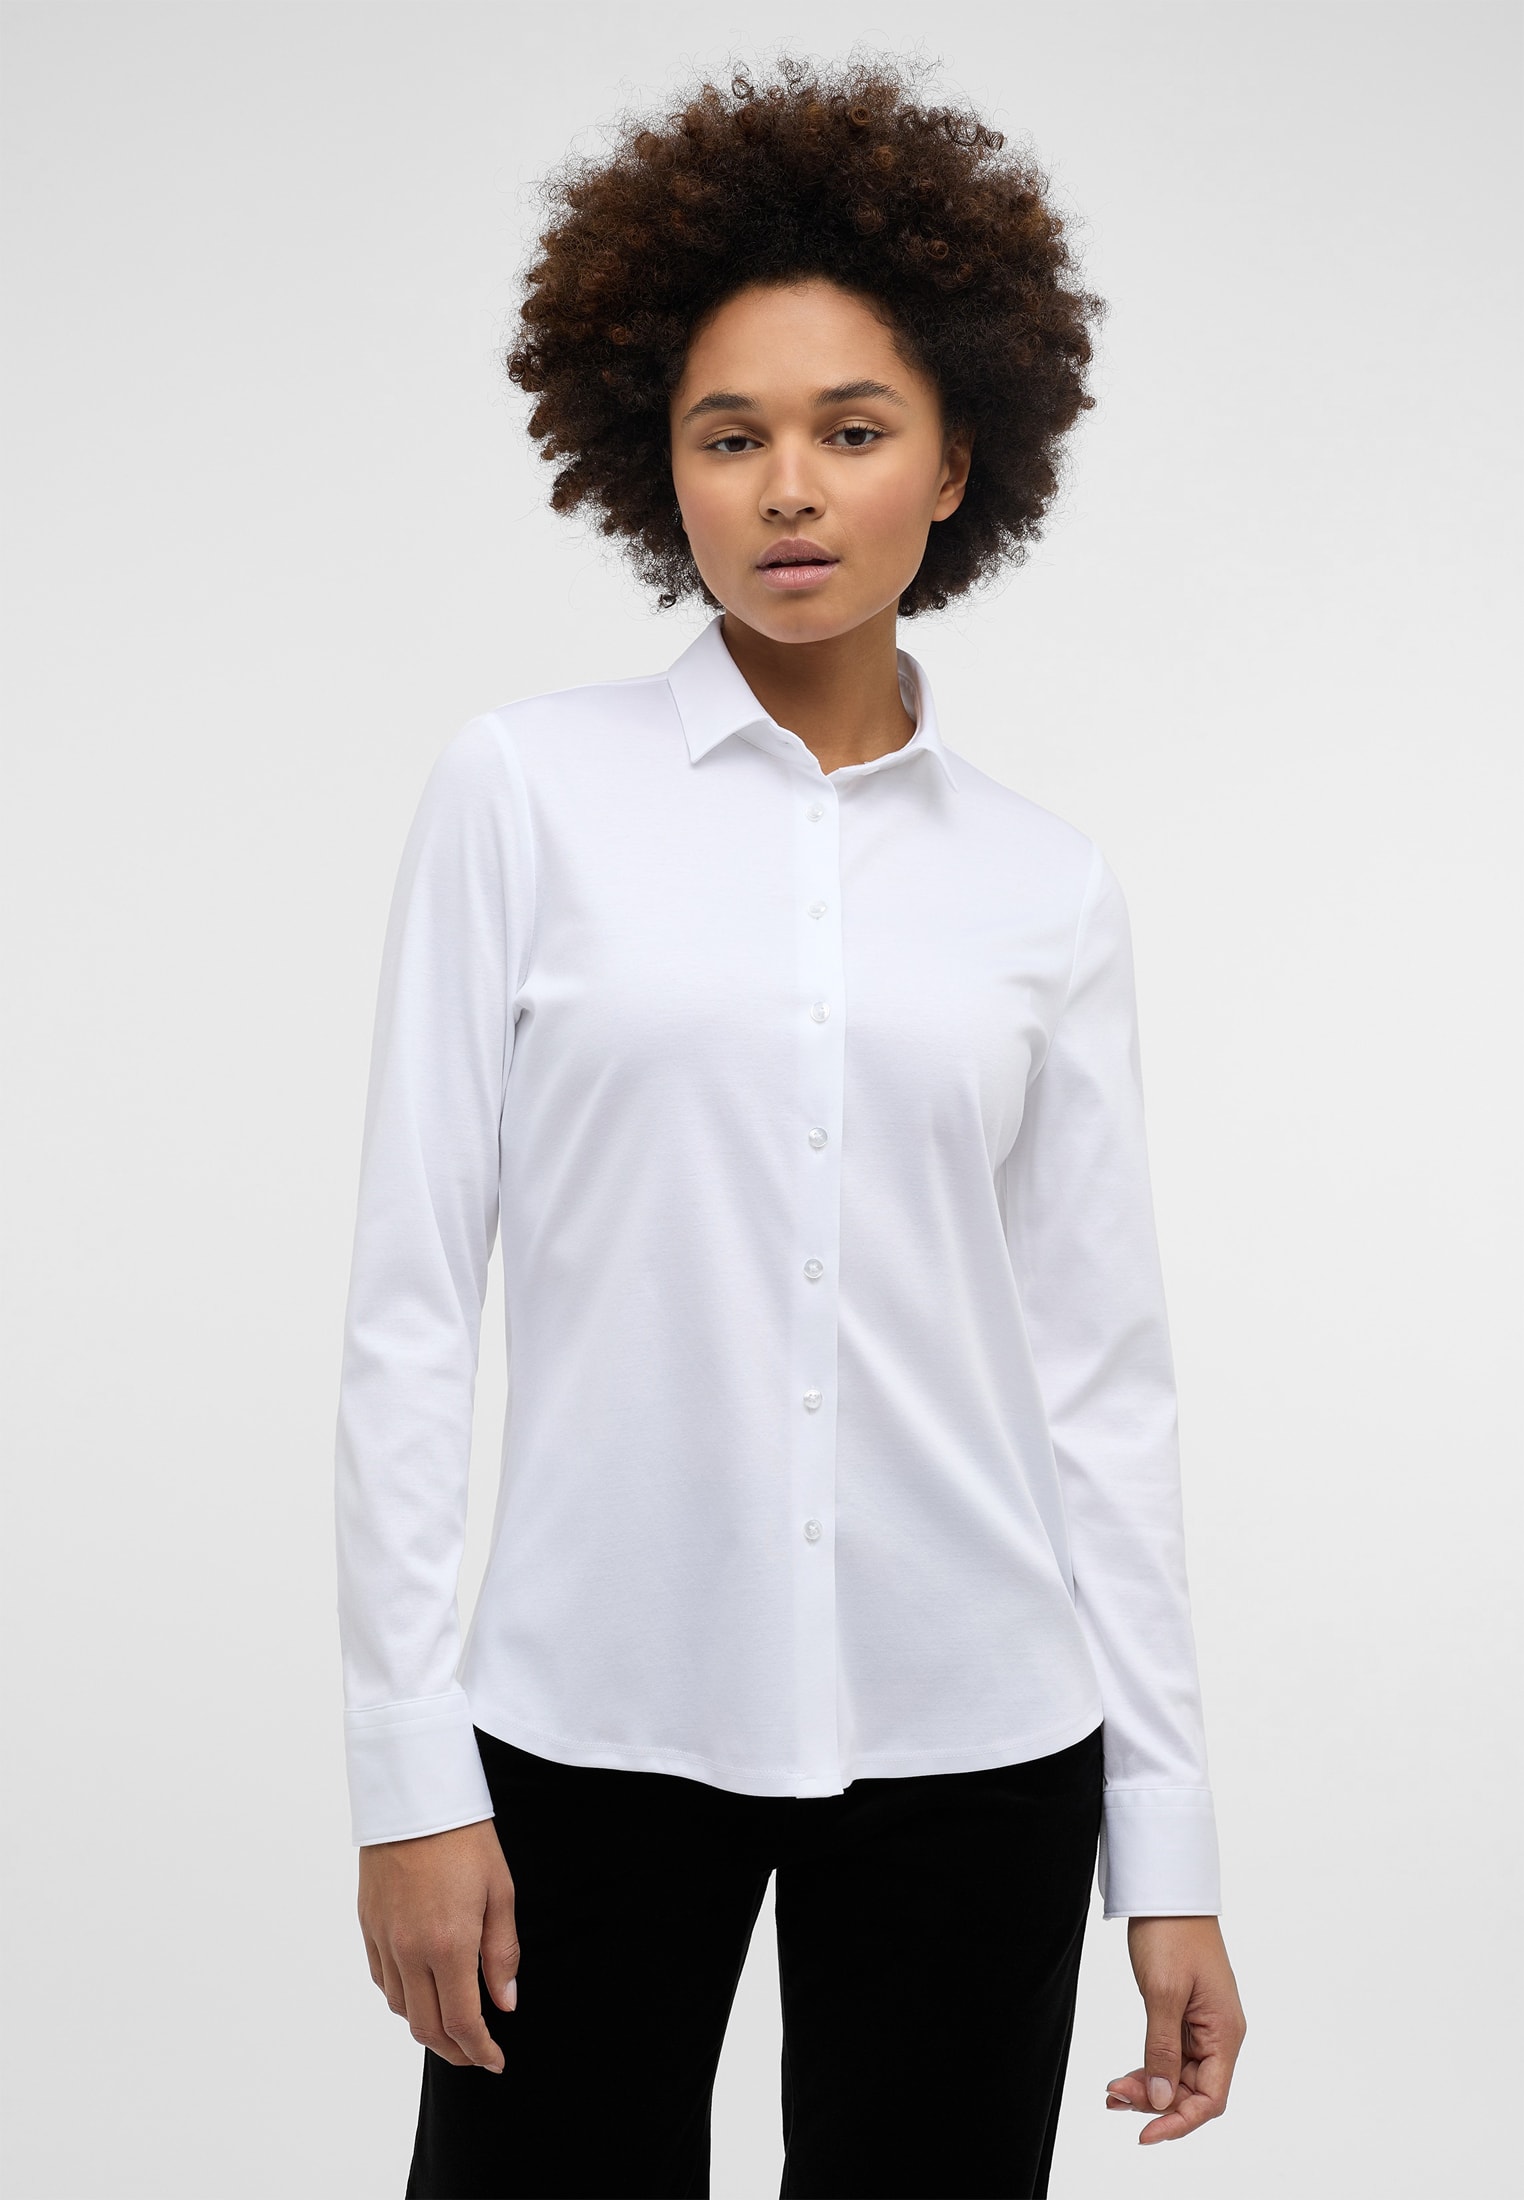 Jersey Shirt Blouse in white long | white | | 2BL00229-00-01-42-1/1 sleeve plain 42 